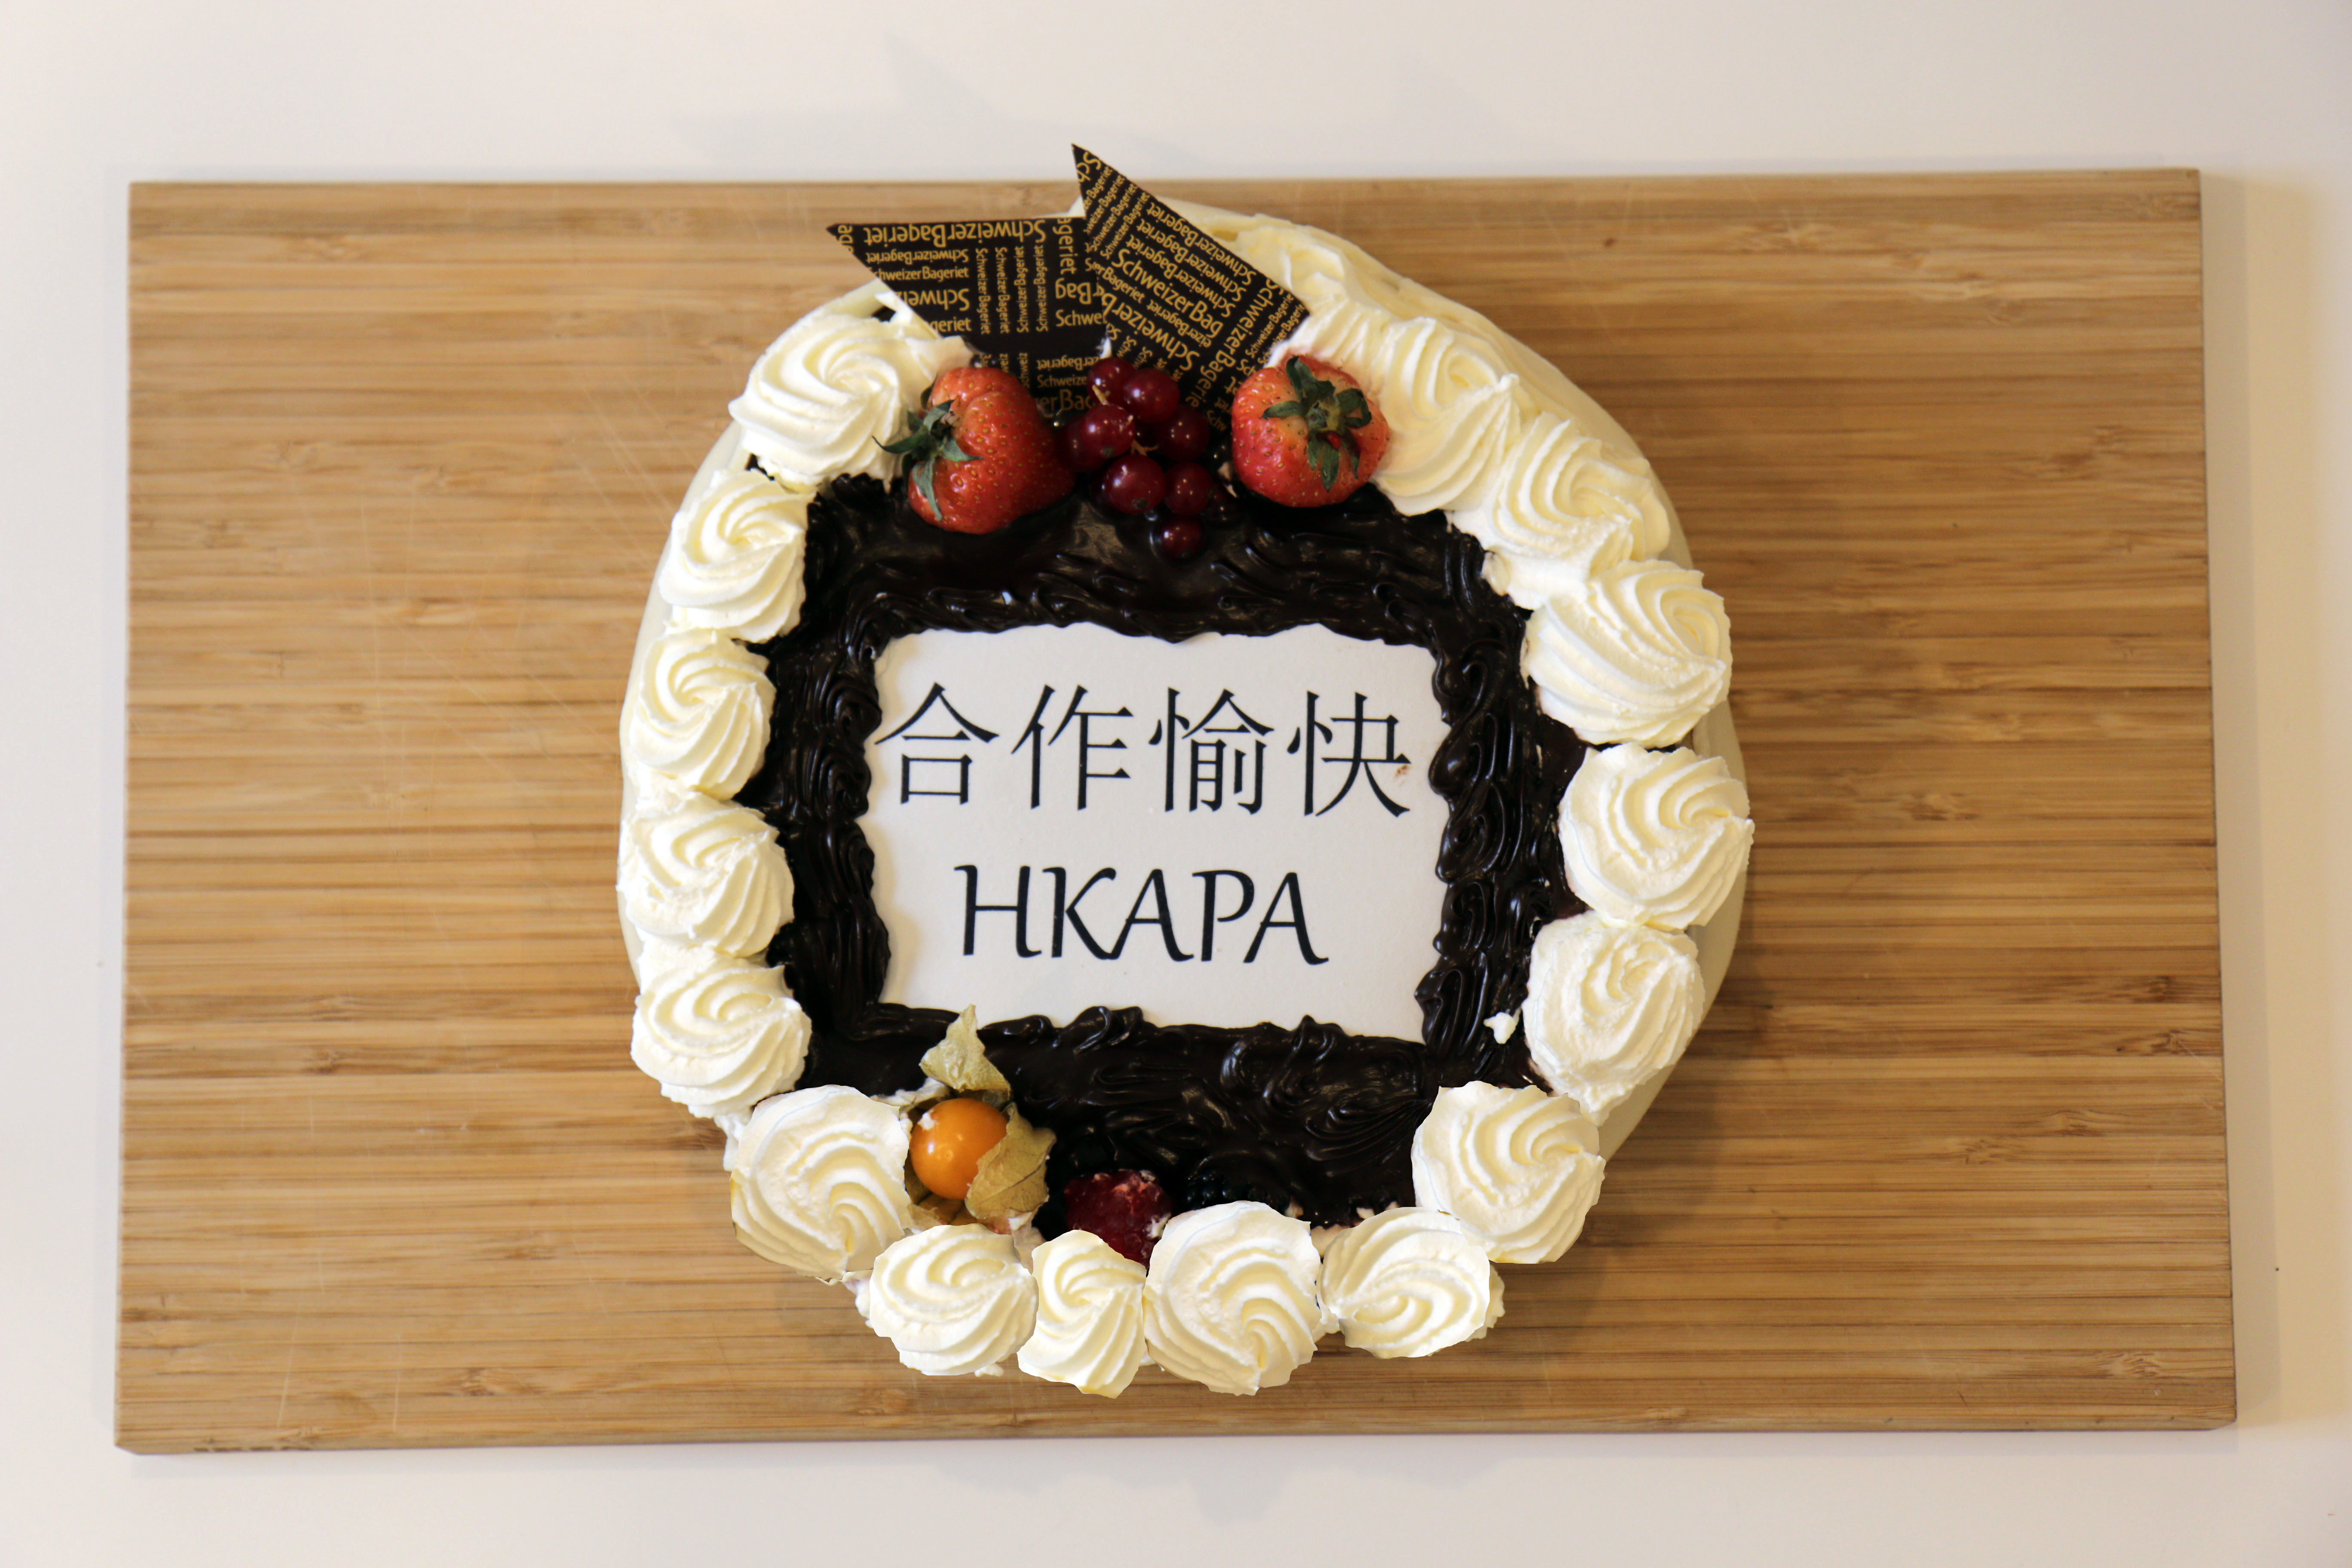 ASIMUT welcome cake for HKAPA